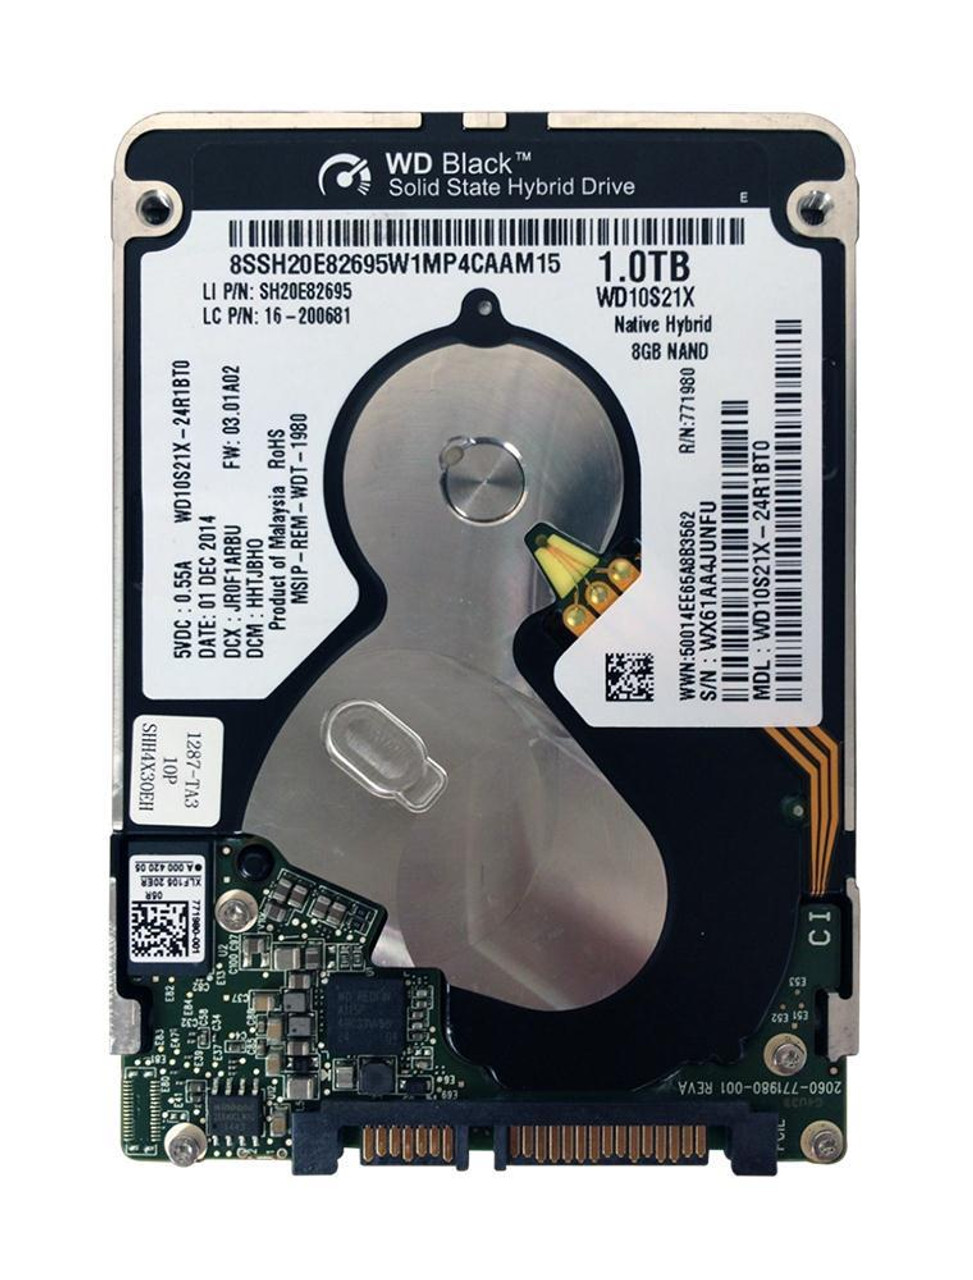 WD10S21X-2WK Western Digital Black SSHD 1TB 5400RPM SATA 6Gbps 16MB Cache 8GB NAND SSD 2.5-inch Internal Hybrid Hard Drive